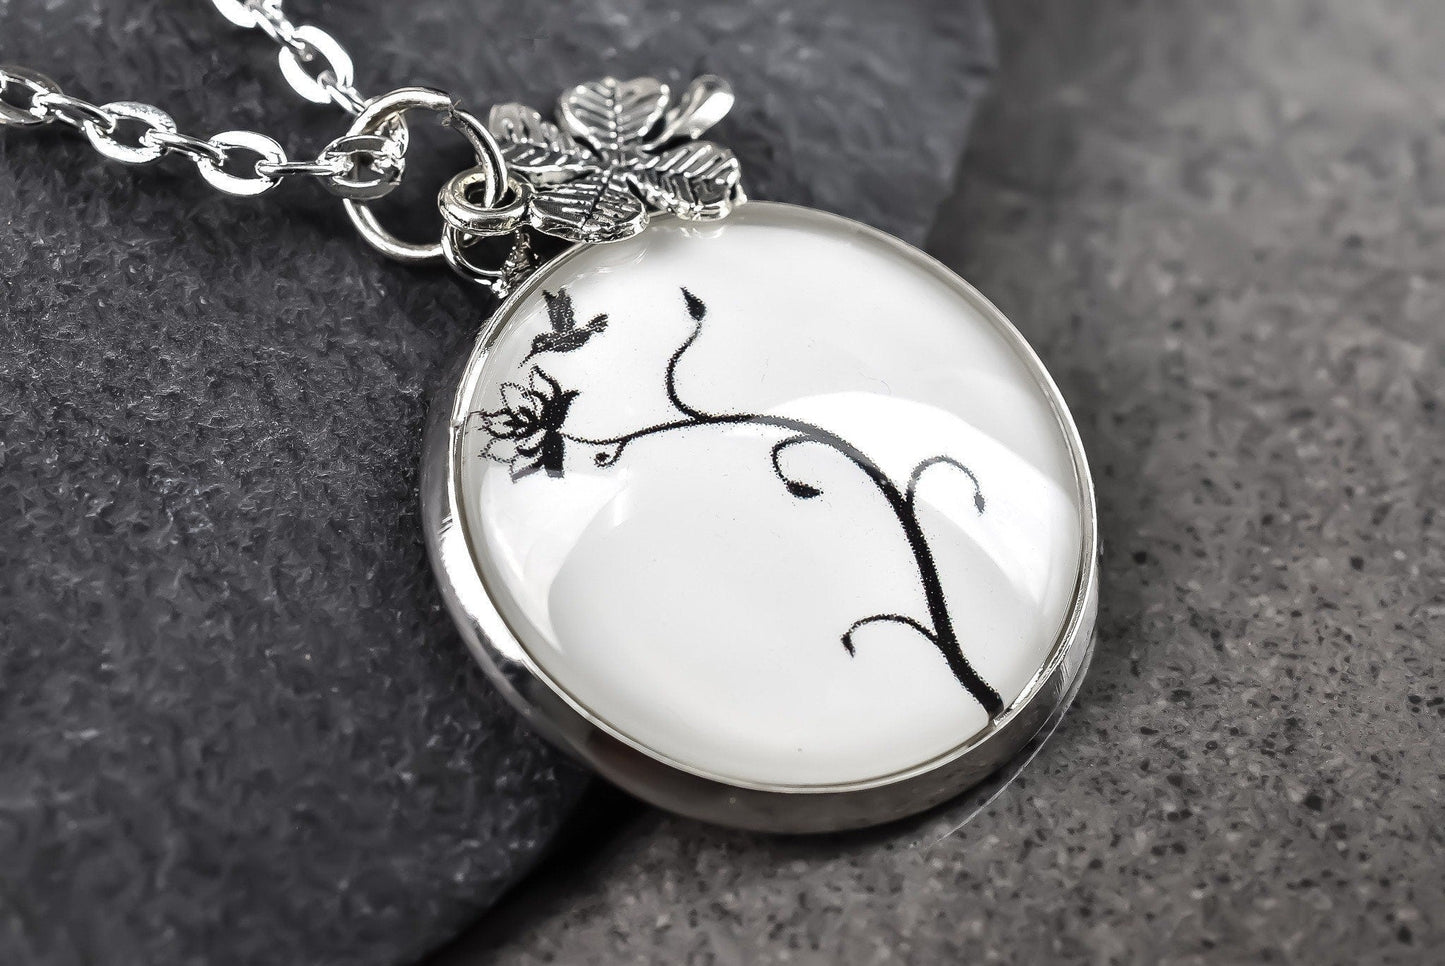 Clover Bird Blossom Glass Pendant - Floral Shabby Jewelry - Minimalist Gift Idea - VIK-34